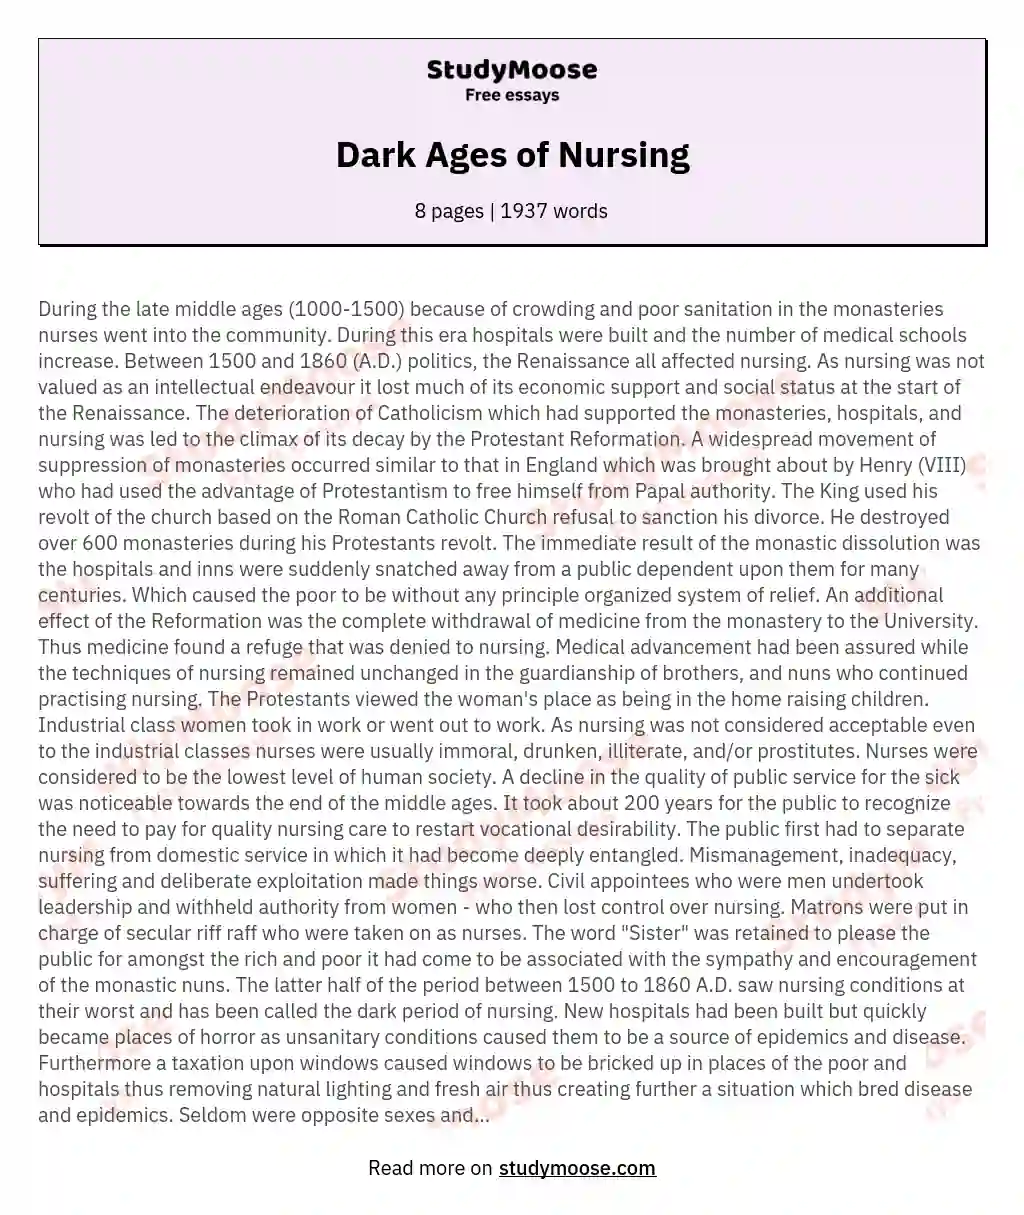 Dark Ages of Nursing essay